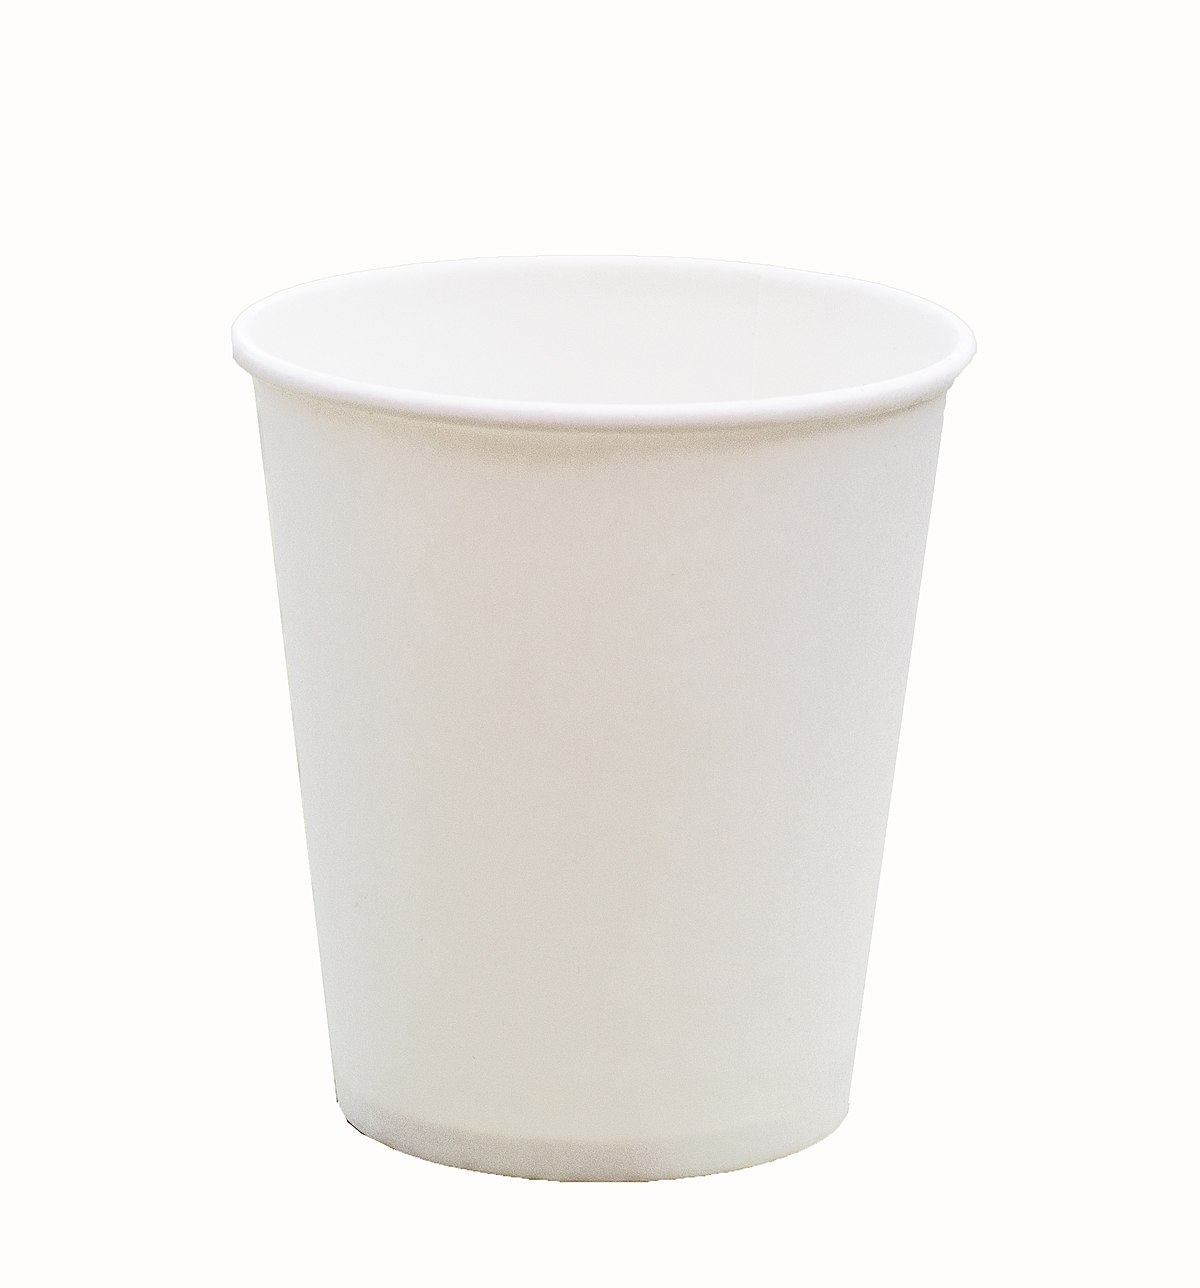 Paper cup - Wikipedia